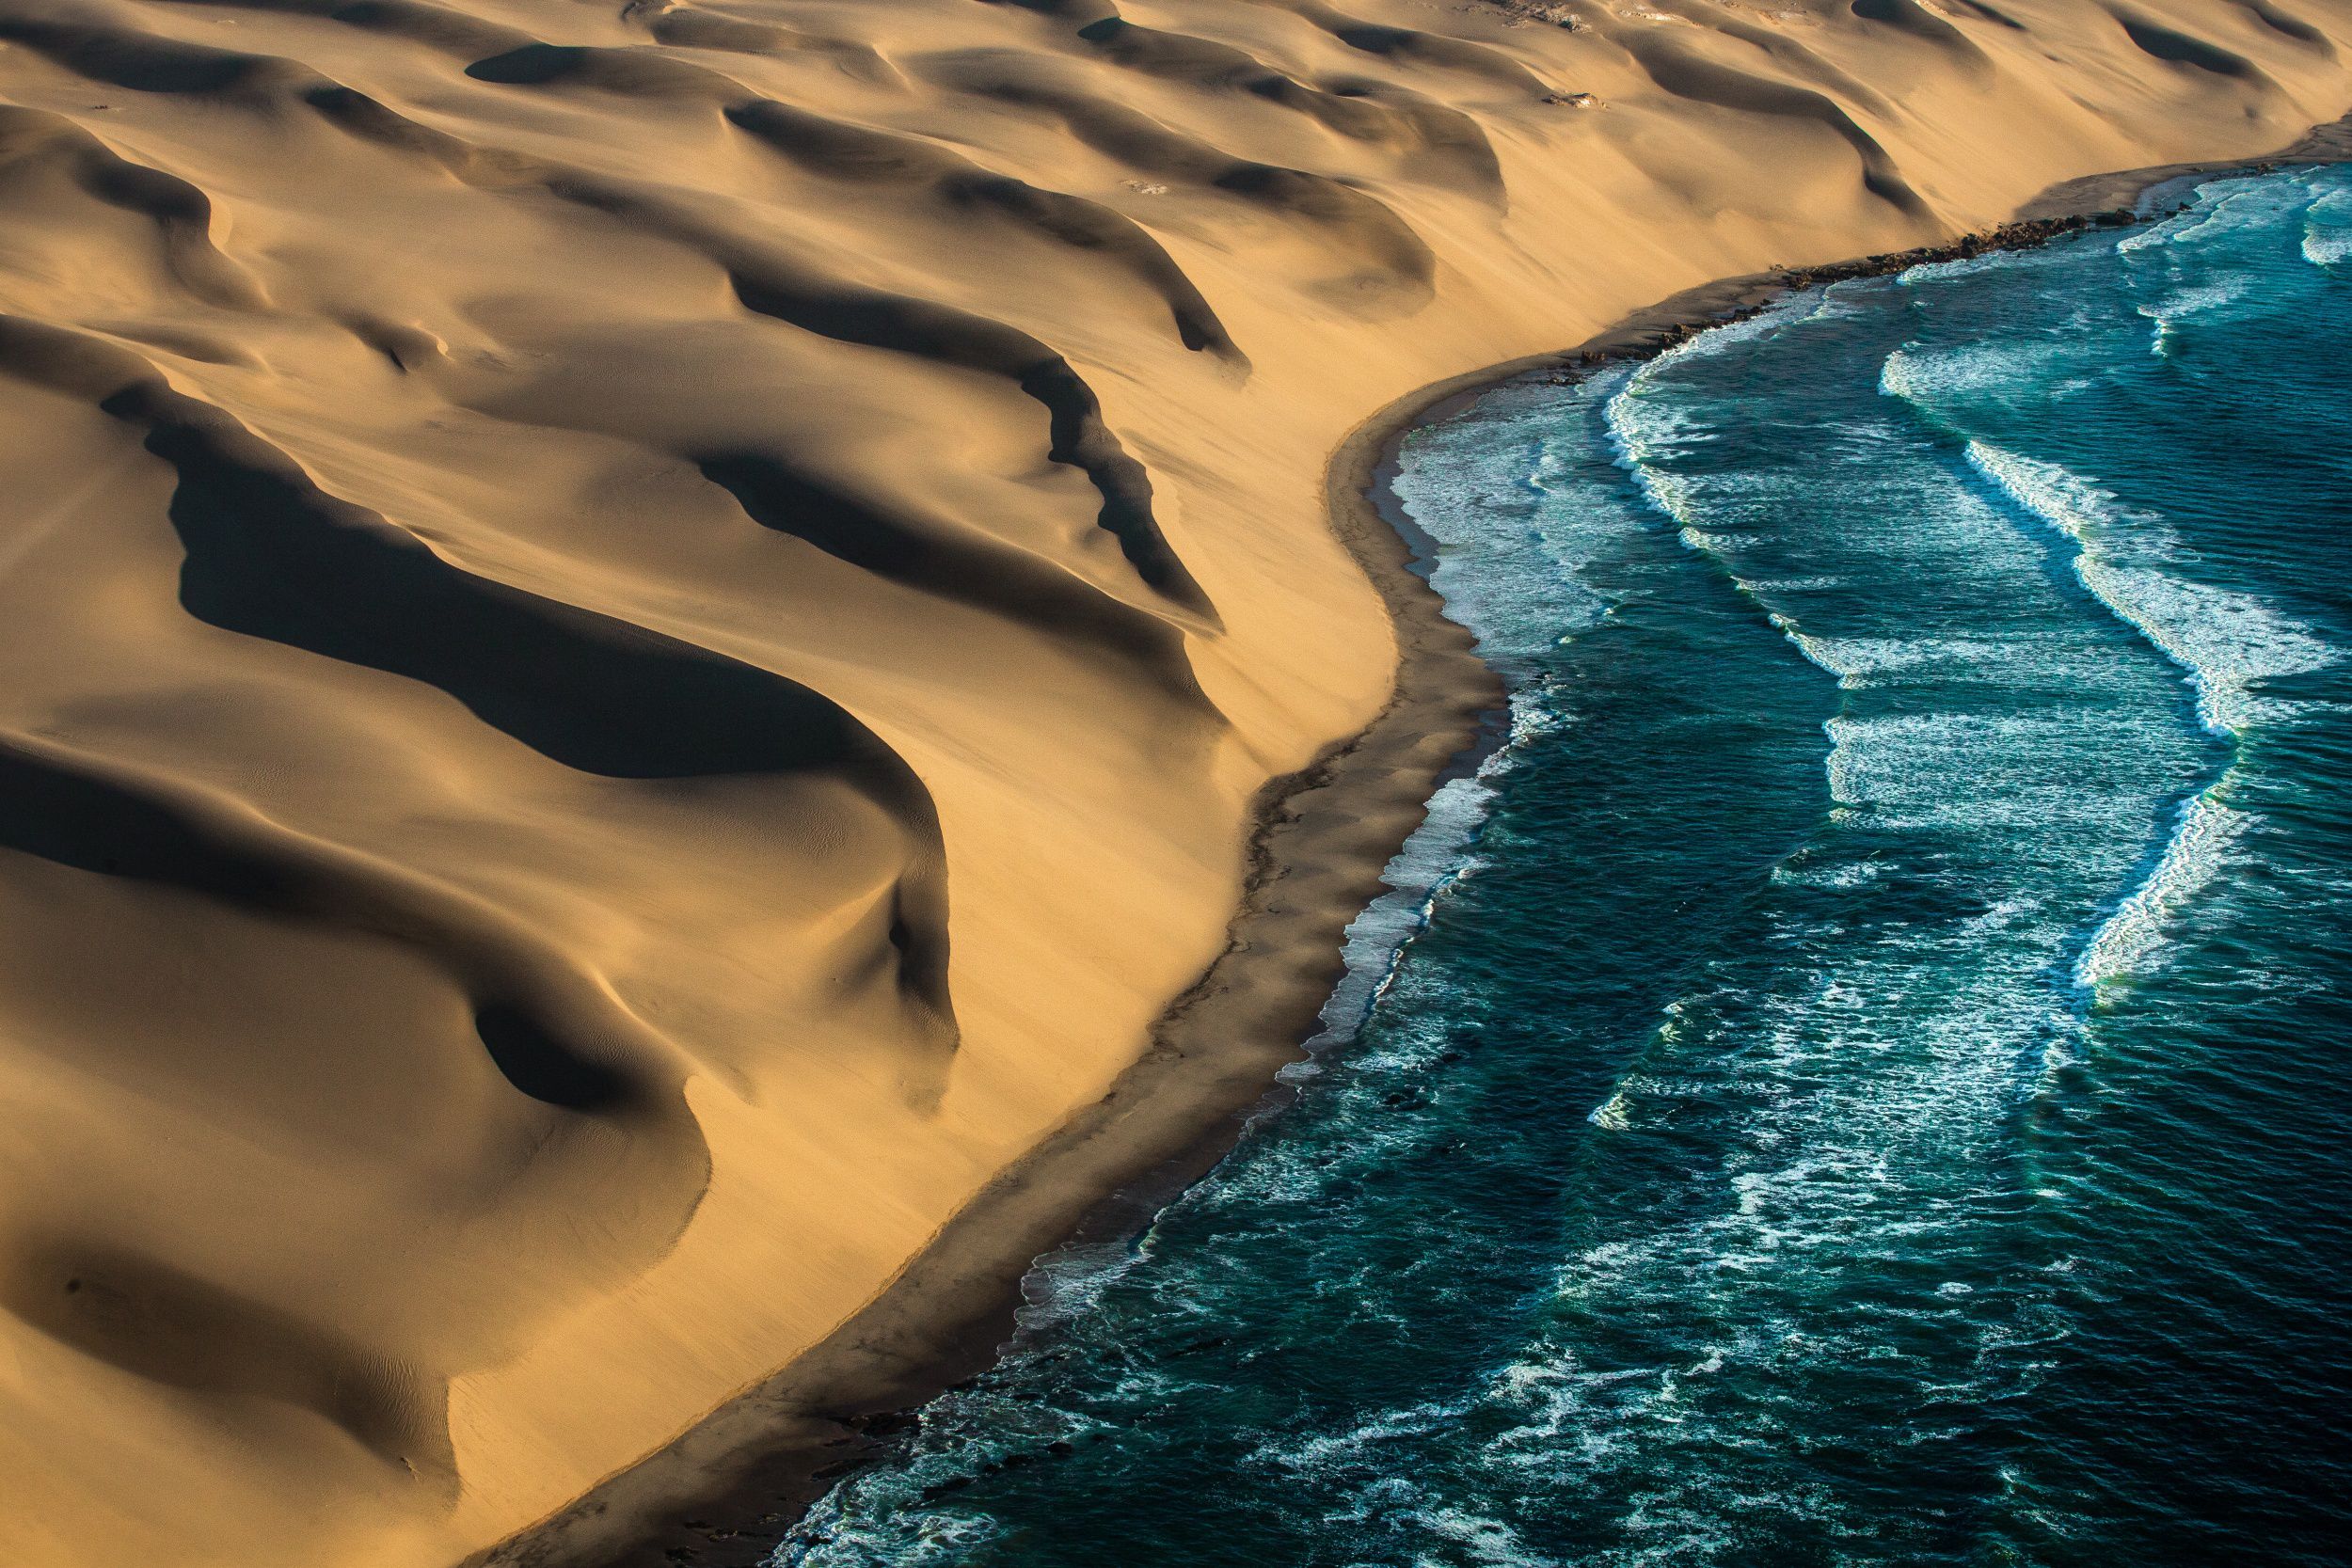 Скелеты сахары. Намибия пустыня Намиб. Пустыня Намиб и океан. Пустыня Намиб и Атлантический океан. Берег пустыни Намиб.